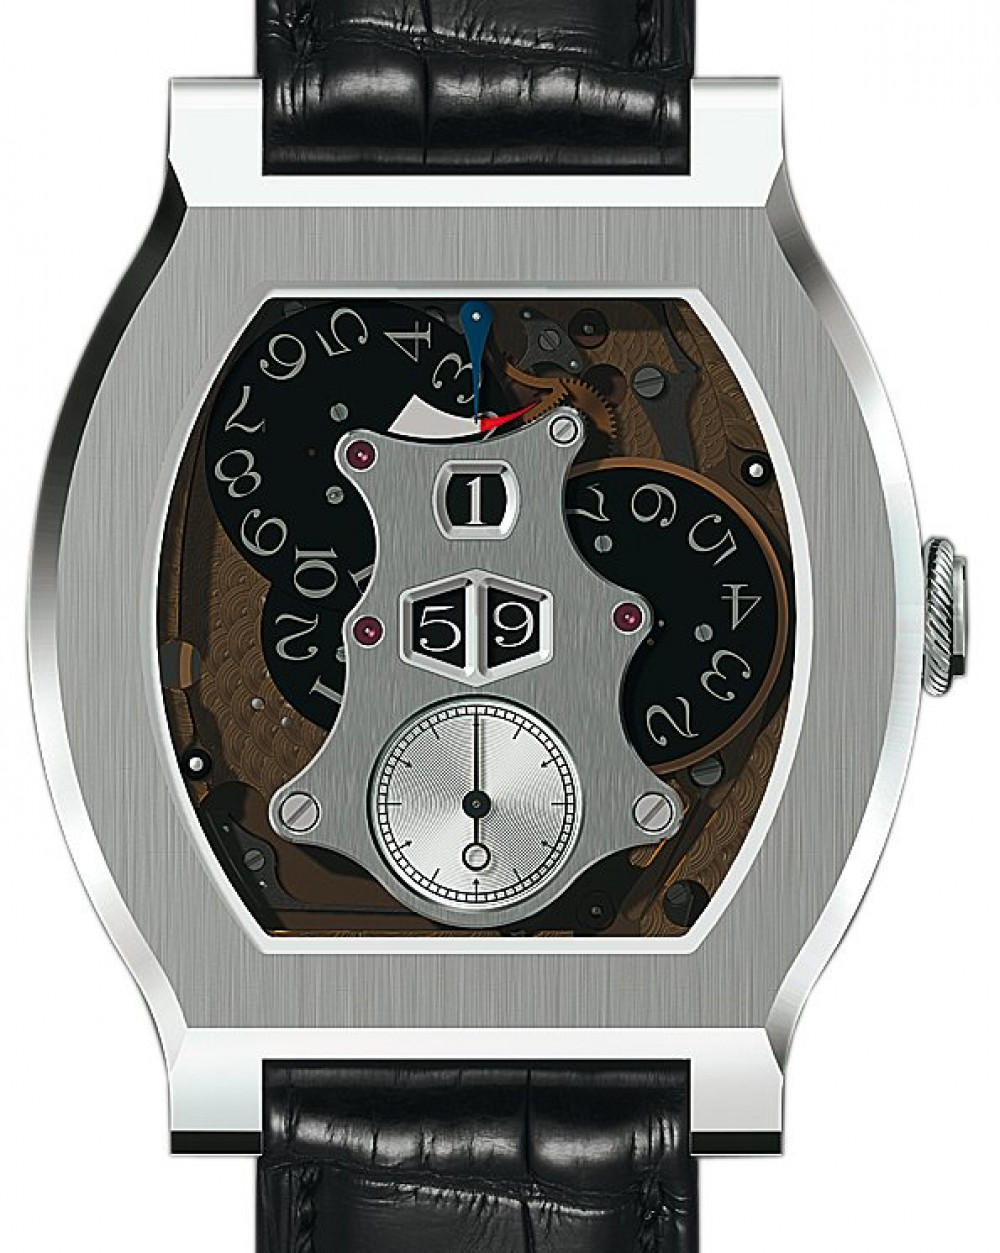 Zegarek firmy F. P. Journe, model Vagabondage II